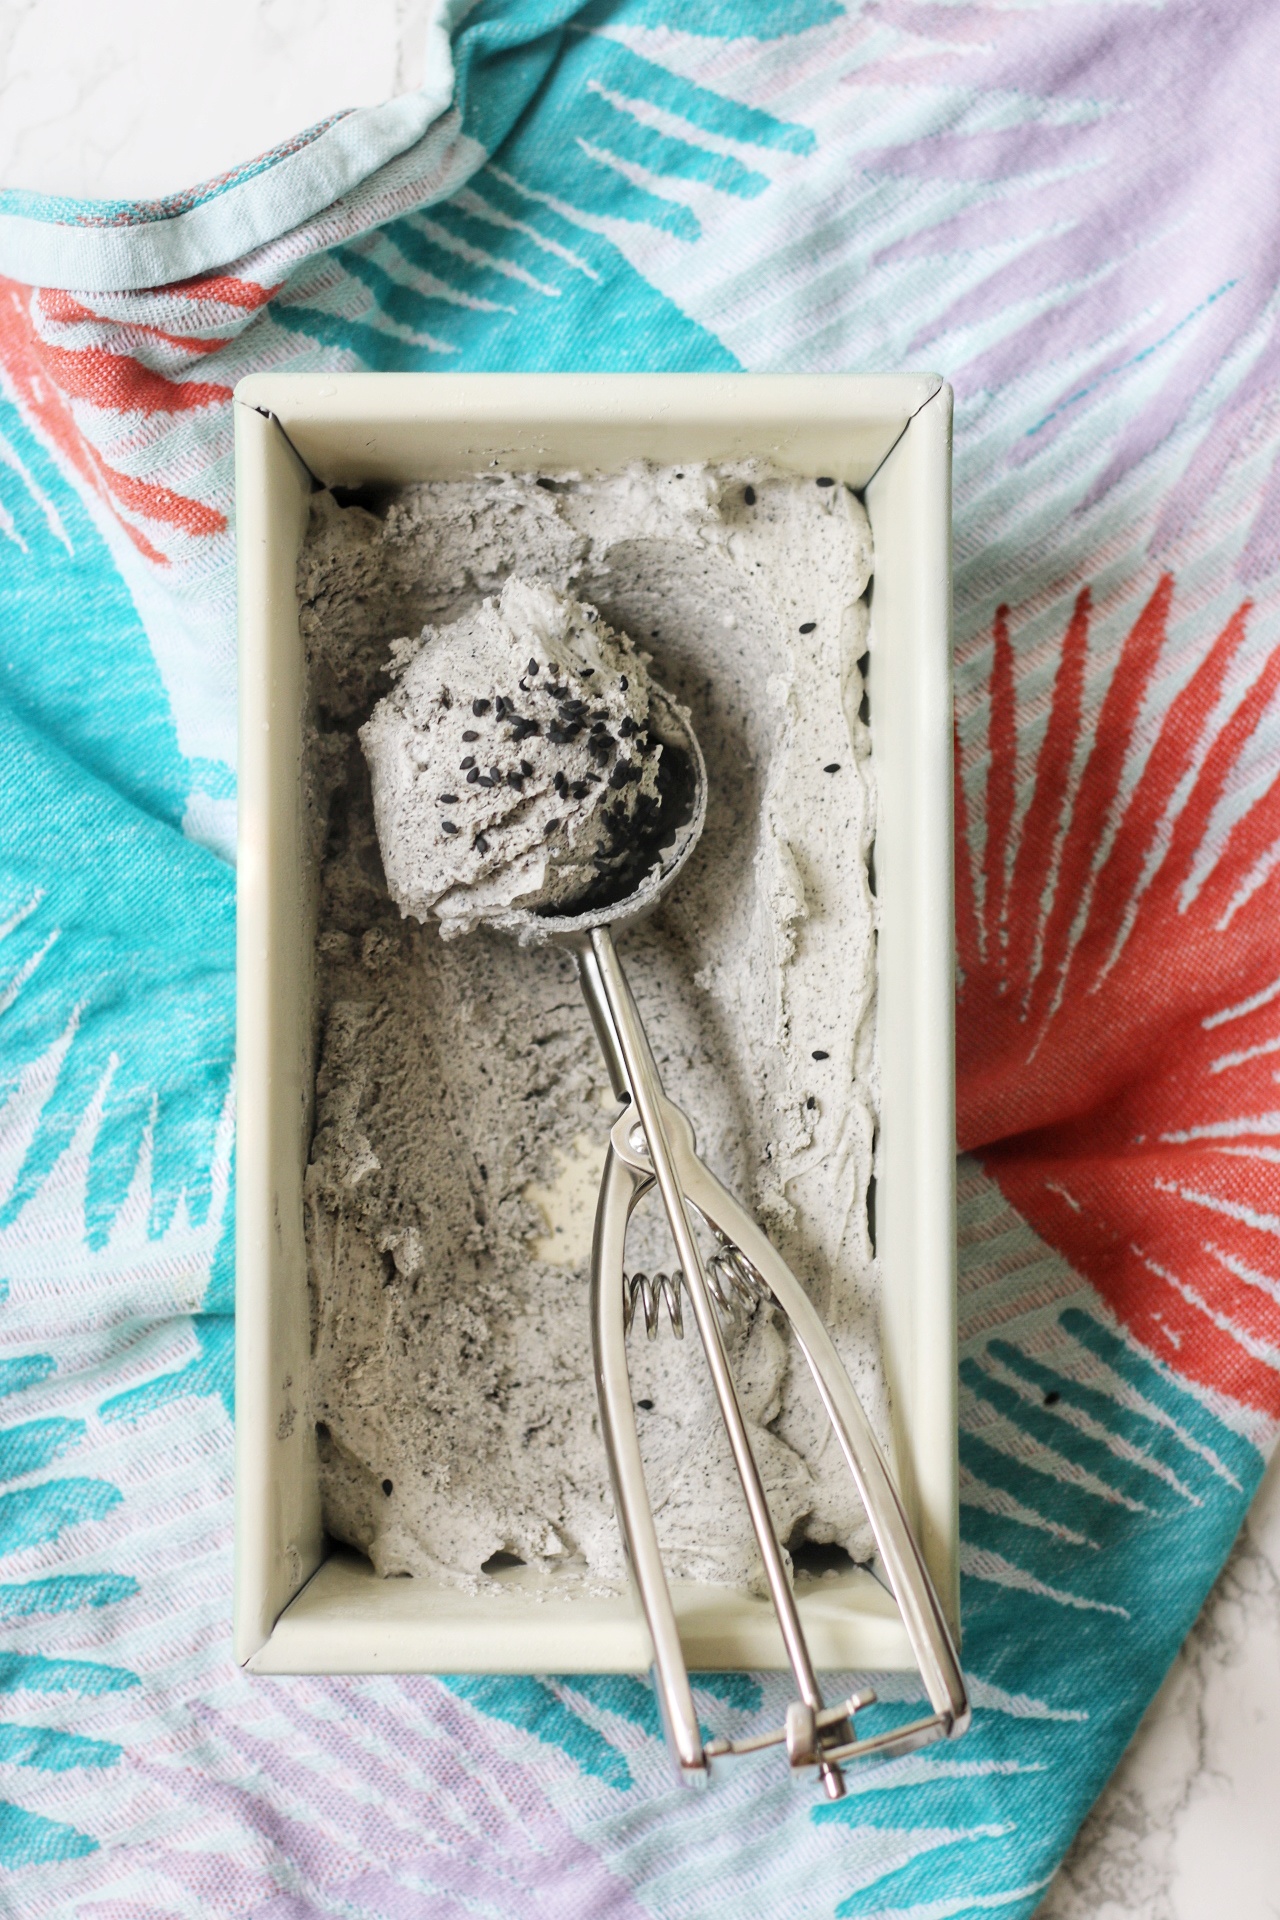 A scoop of black sesame ice cream